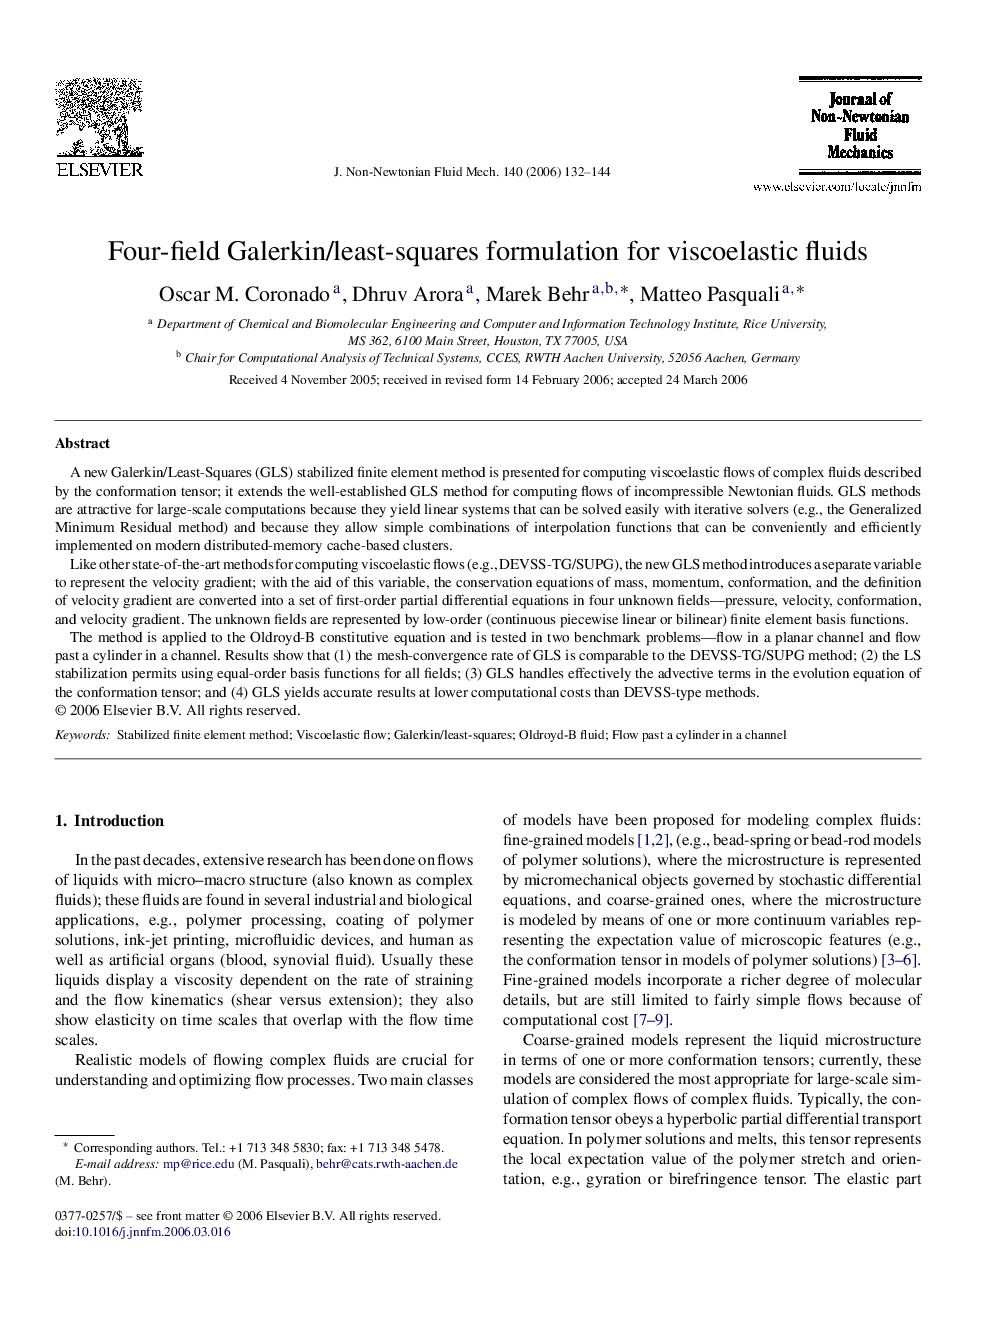 Four-field Galerkin/least-squares formulation for viscoelastic fluids